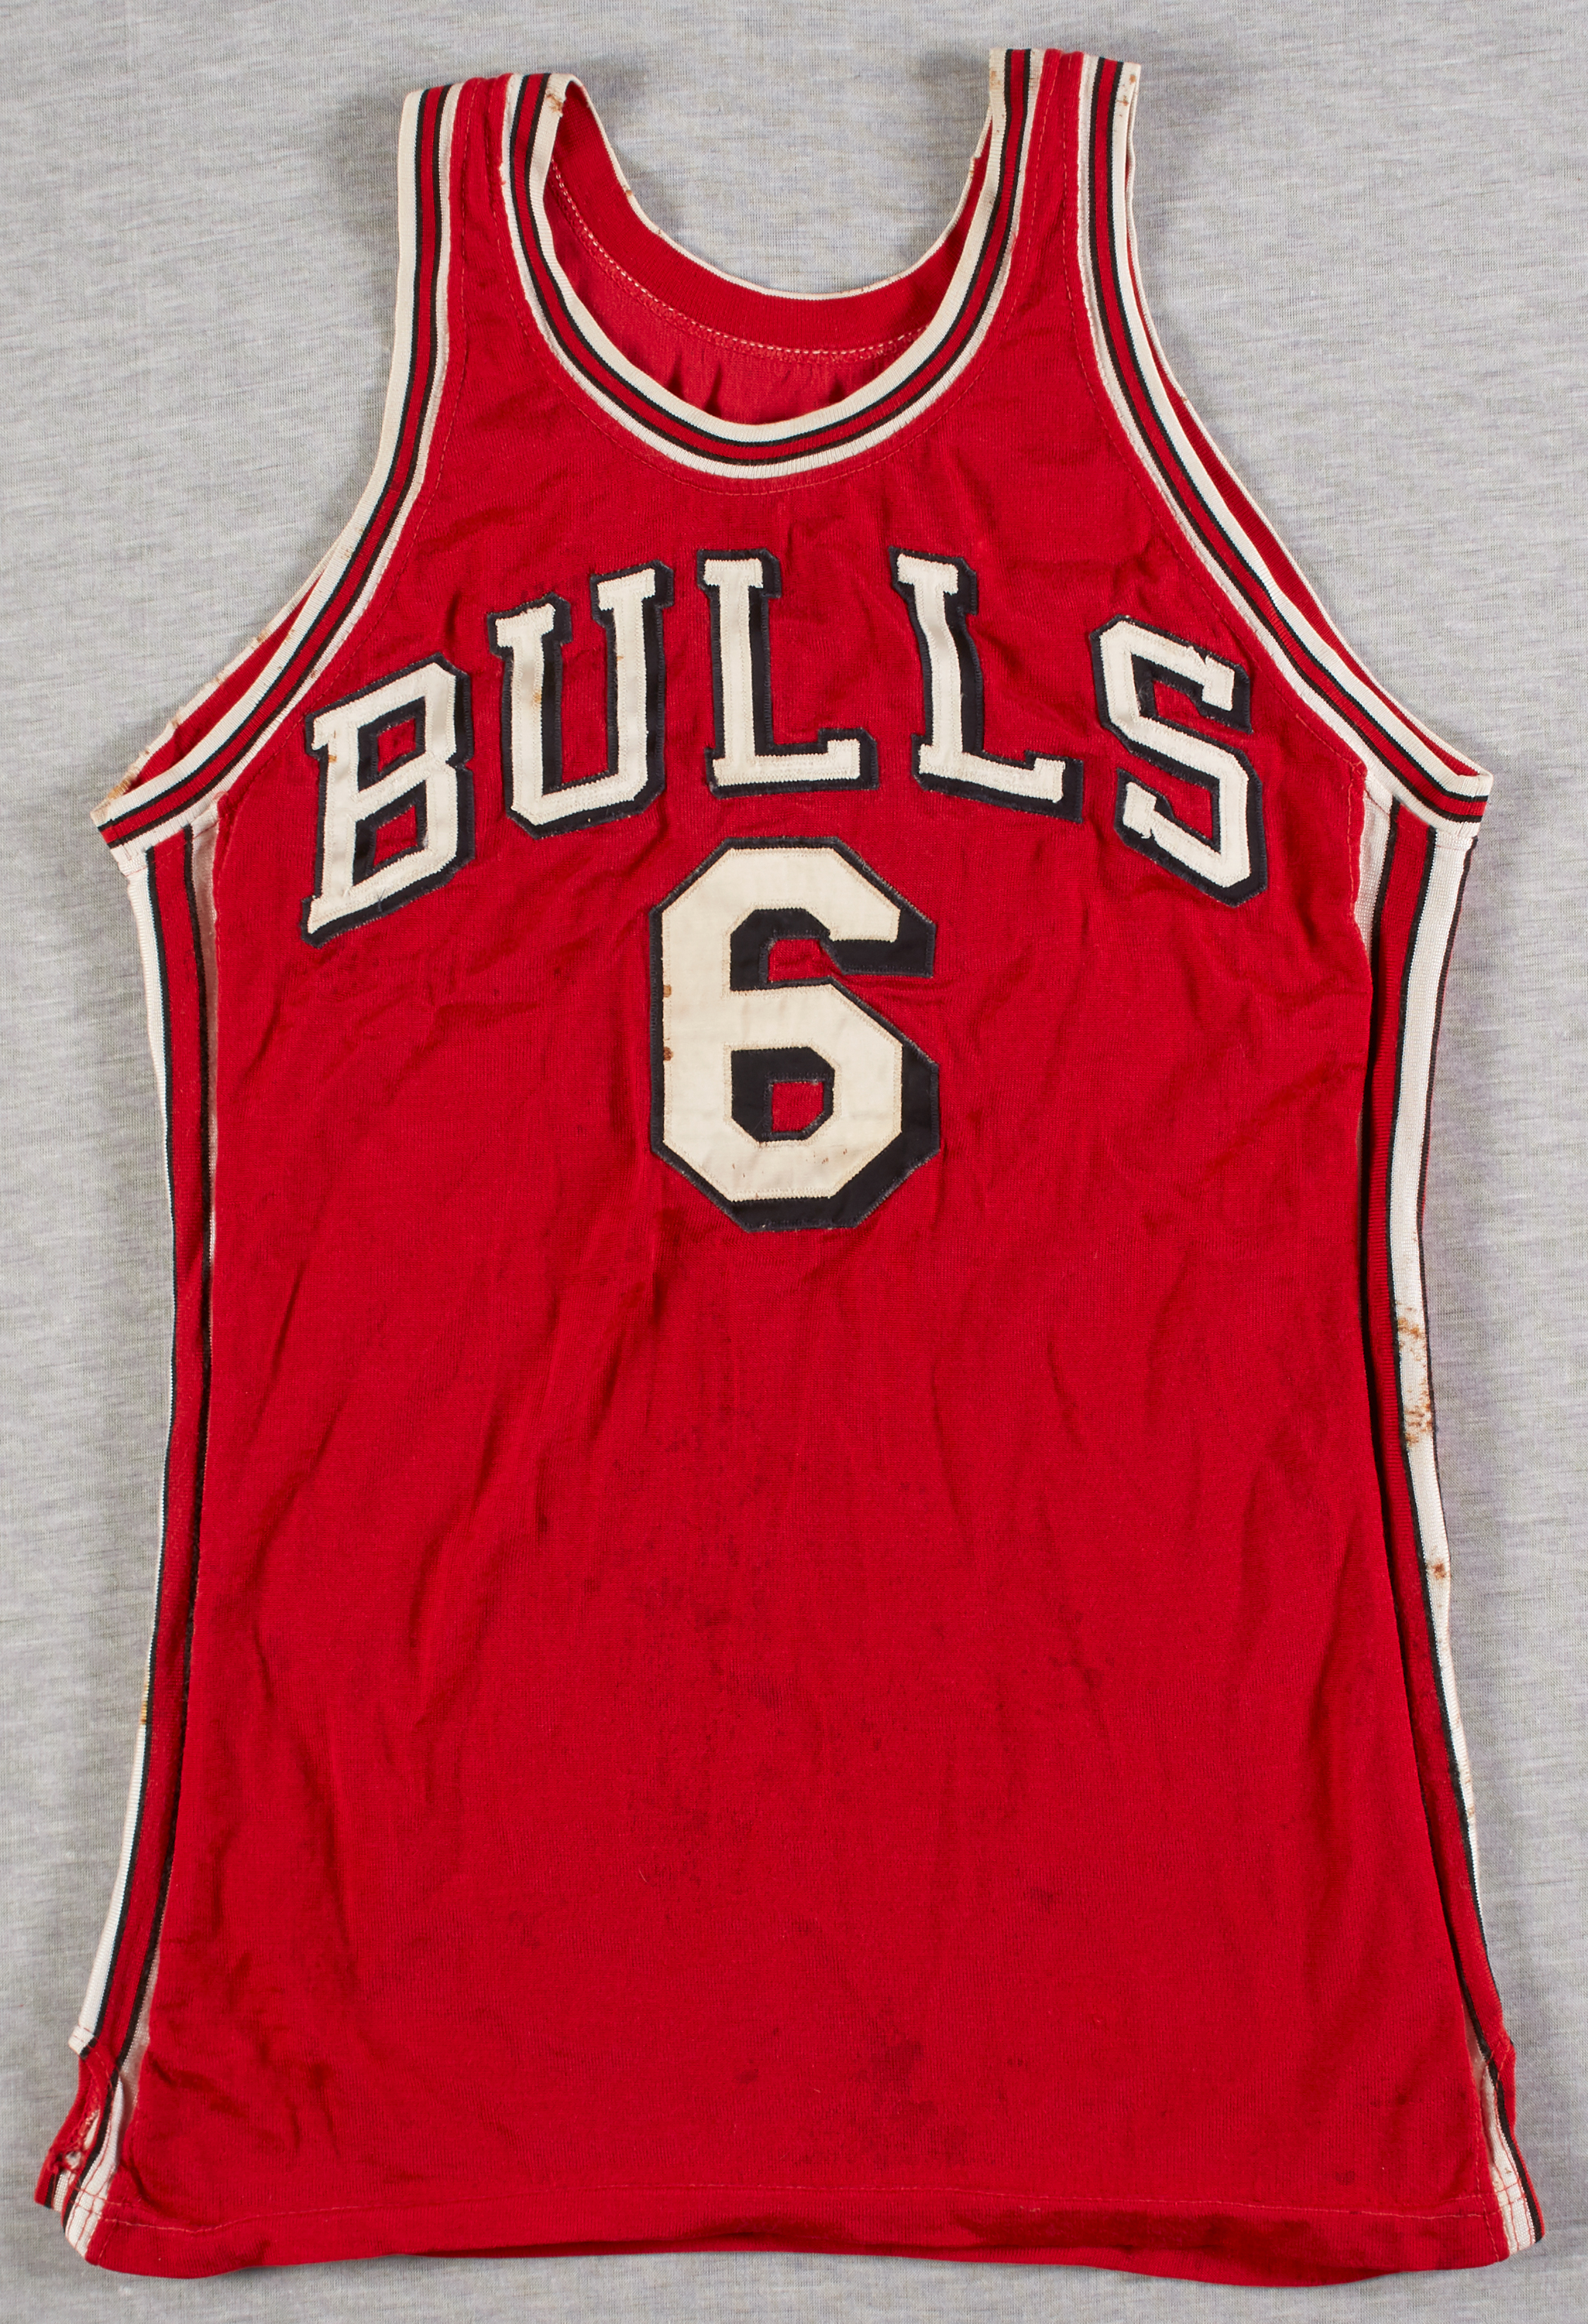 bulls 6 on jersey